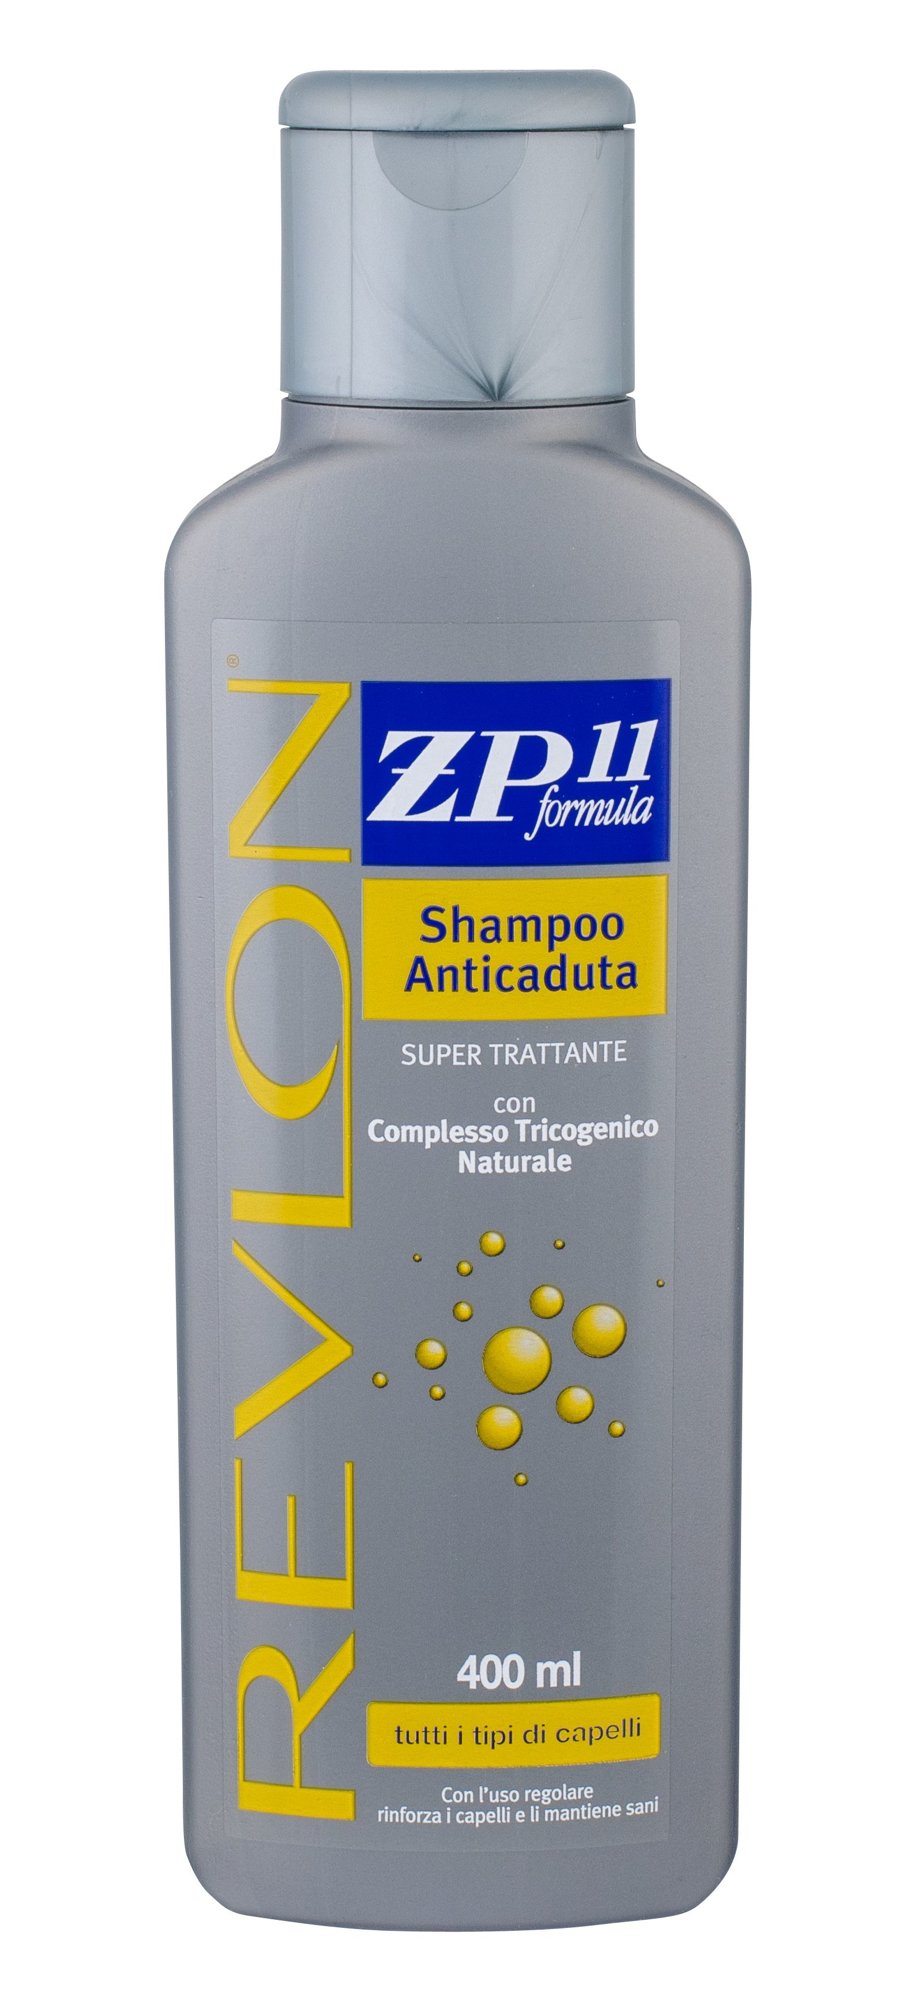 Revlon Professional ZP11 Formula Shampoo Andicaduta